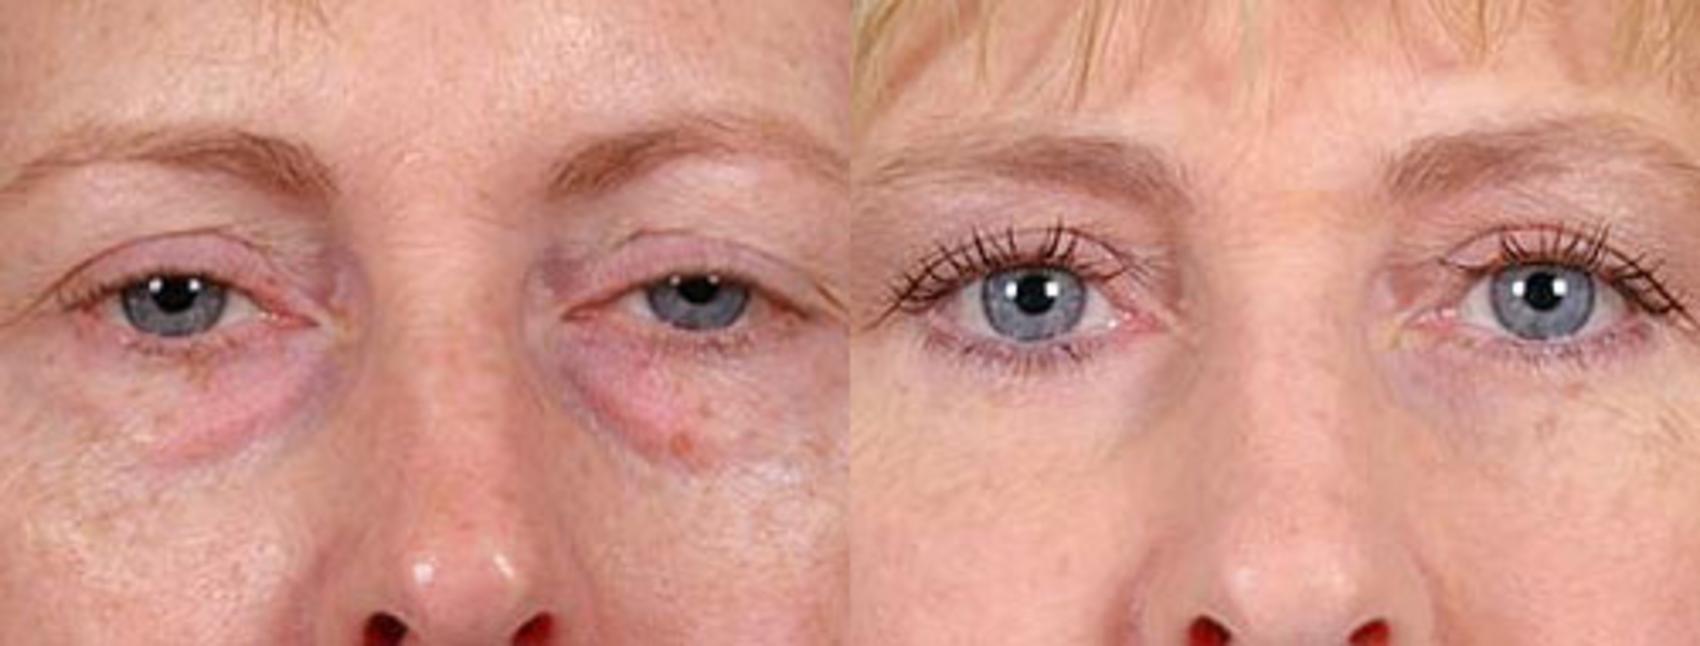 Eyelid Surgery Case 83 Before & After View #1 | Louisville, KY | CaloSpa® Rejuvenation Center